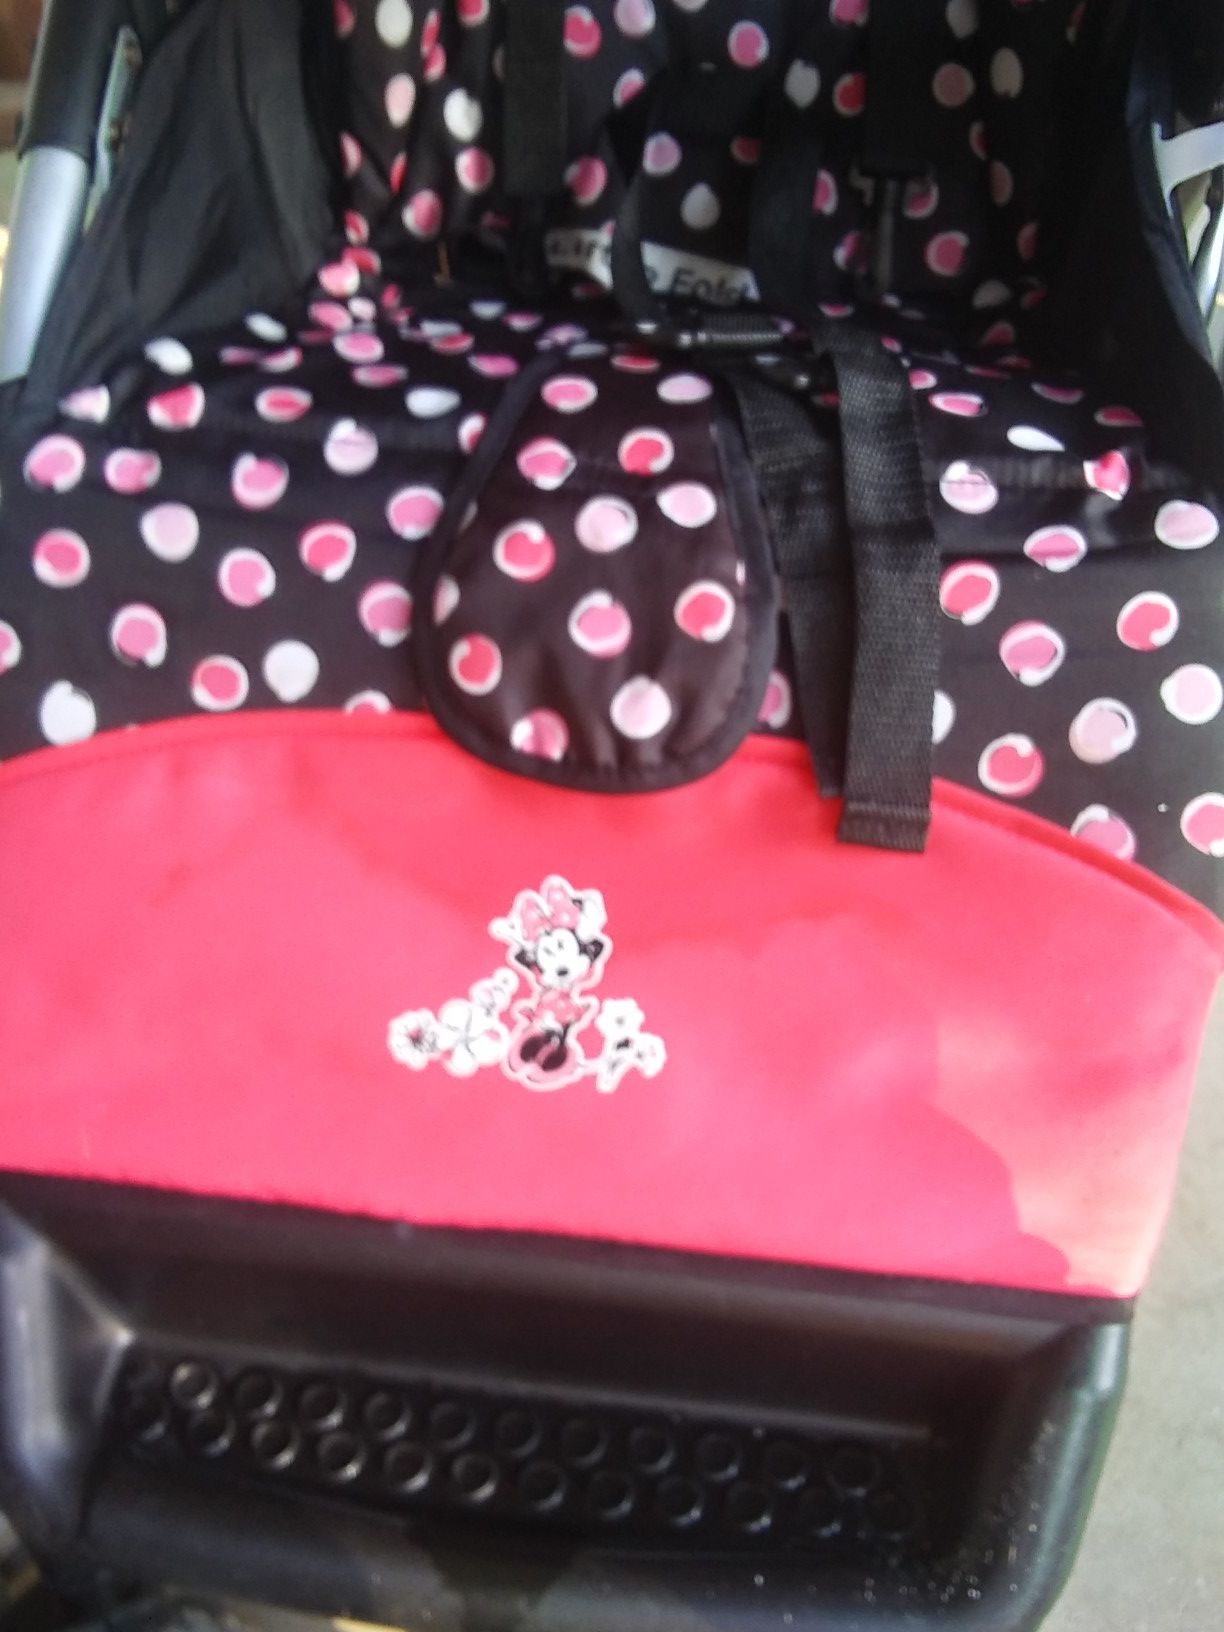 Disney Baby stroller, carseat, carrier